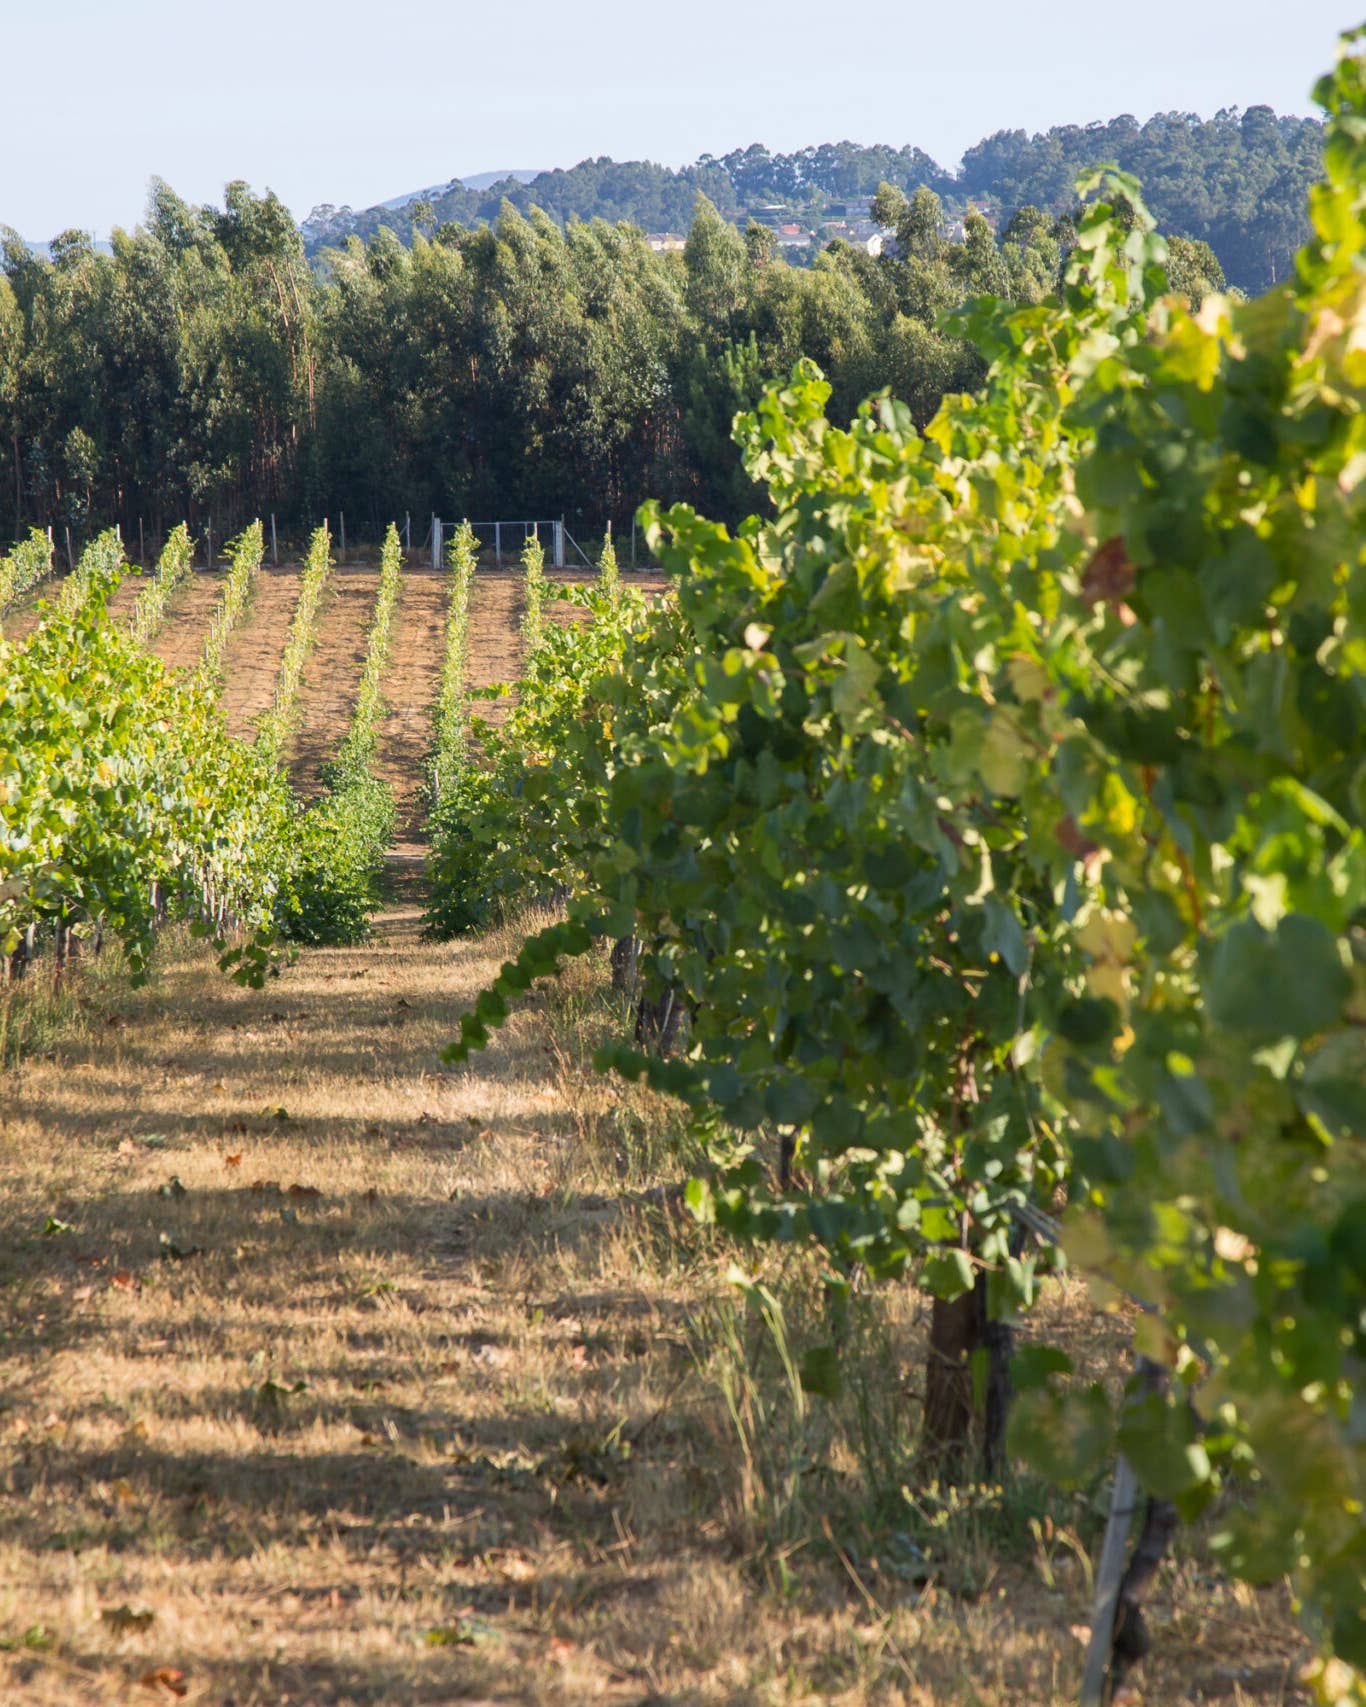 In Portugal’s Vinho Verde, Wine Is Green in More Ways Than One